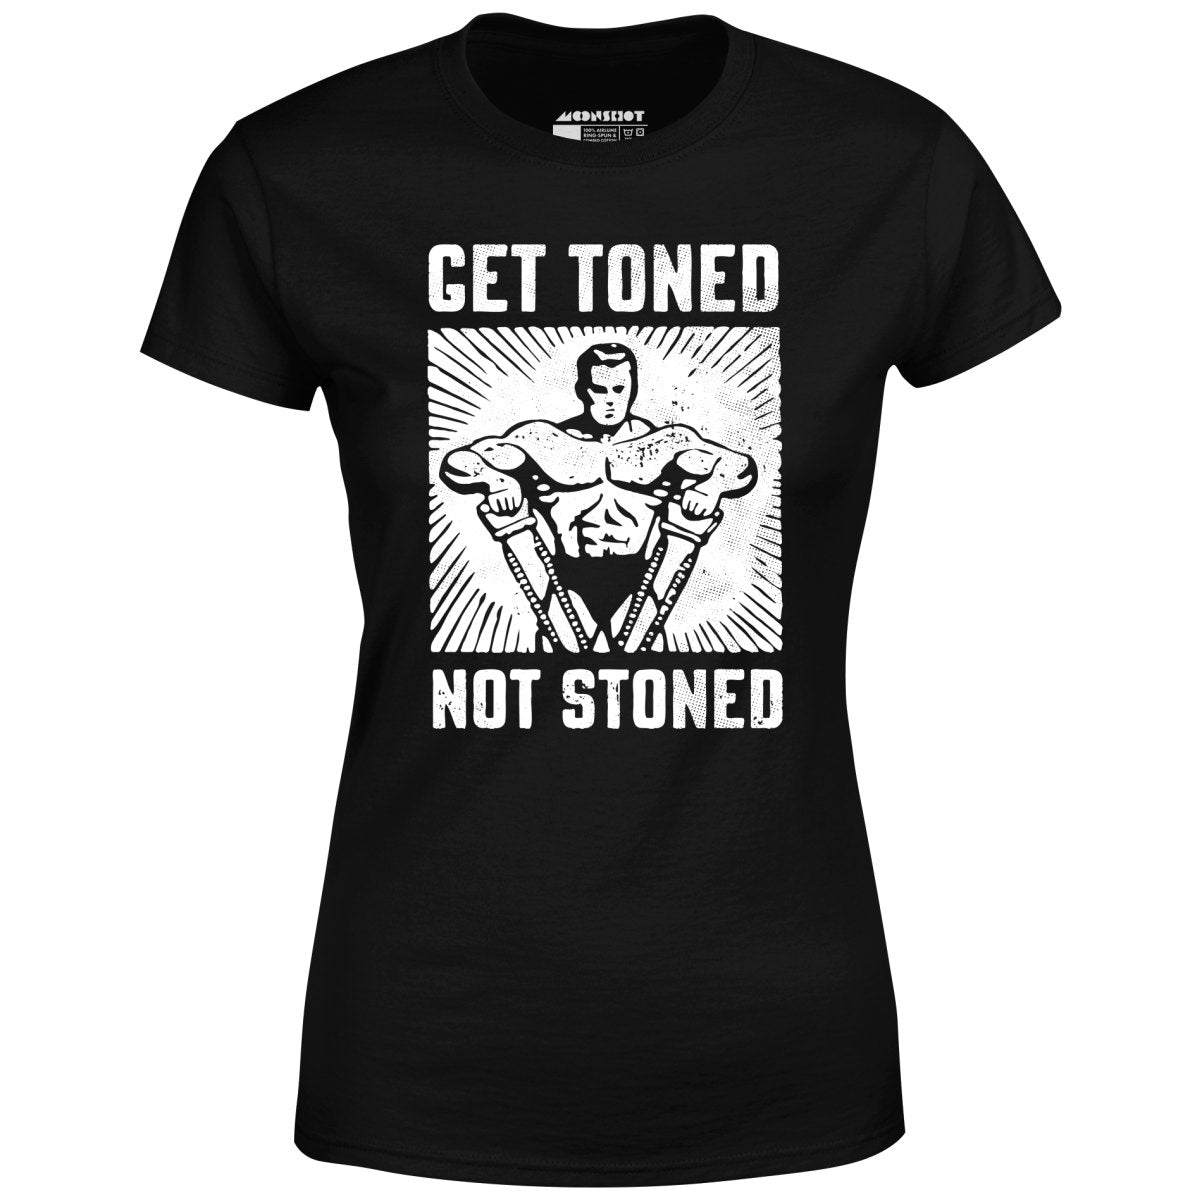 Get Toned Not Stoned - Women's T-Shirt